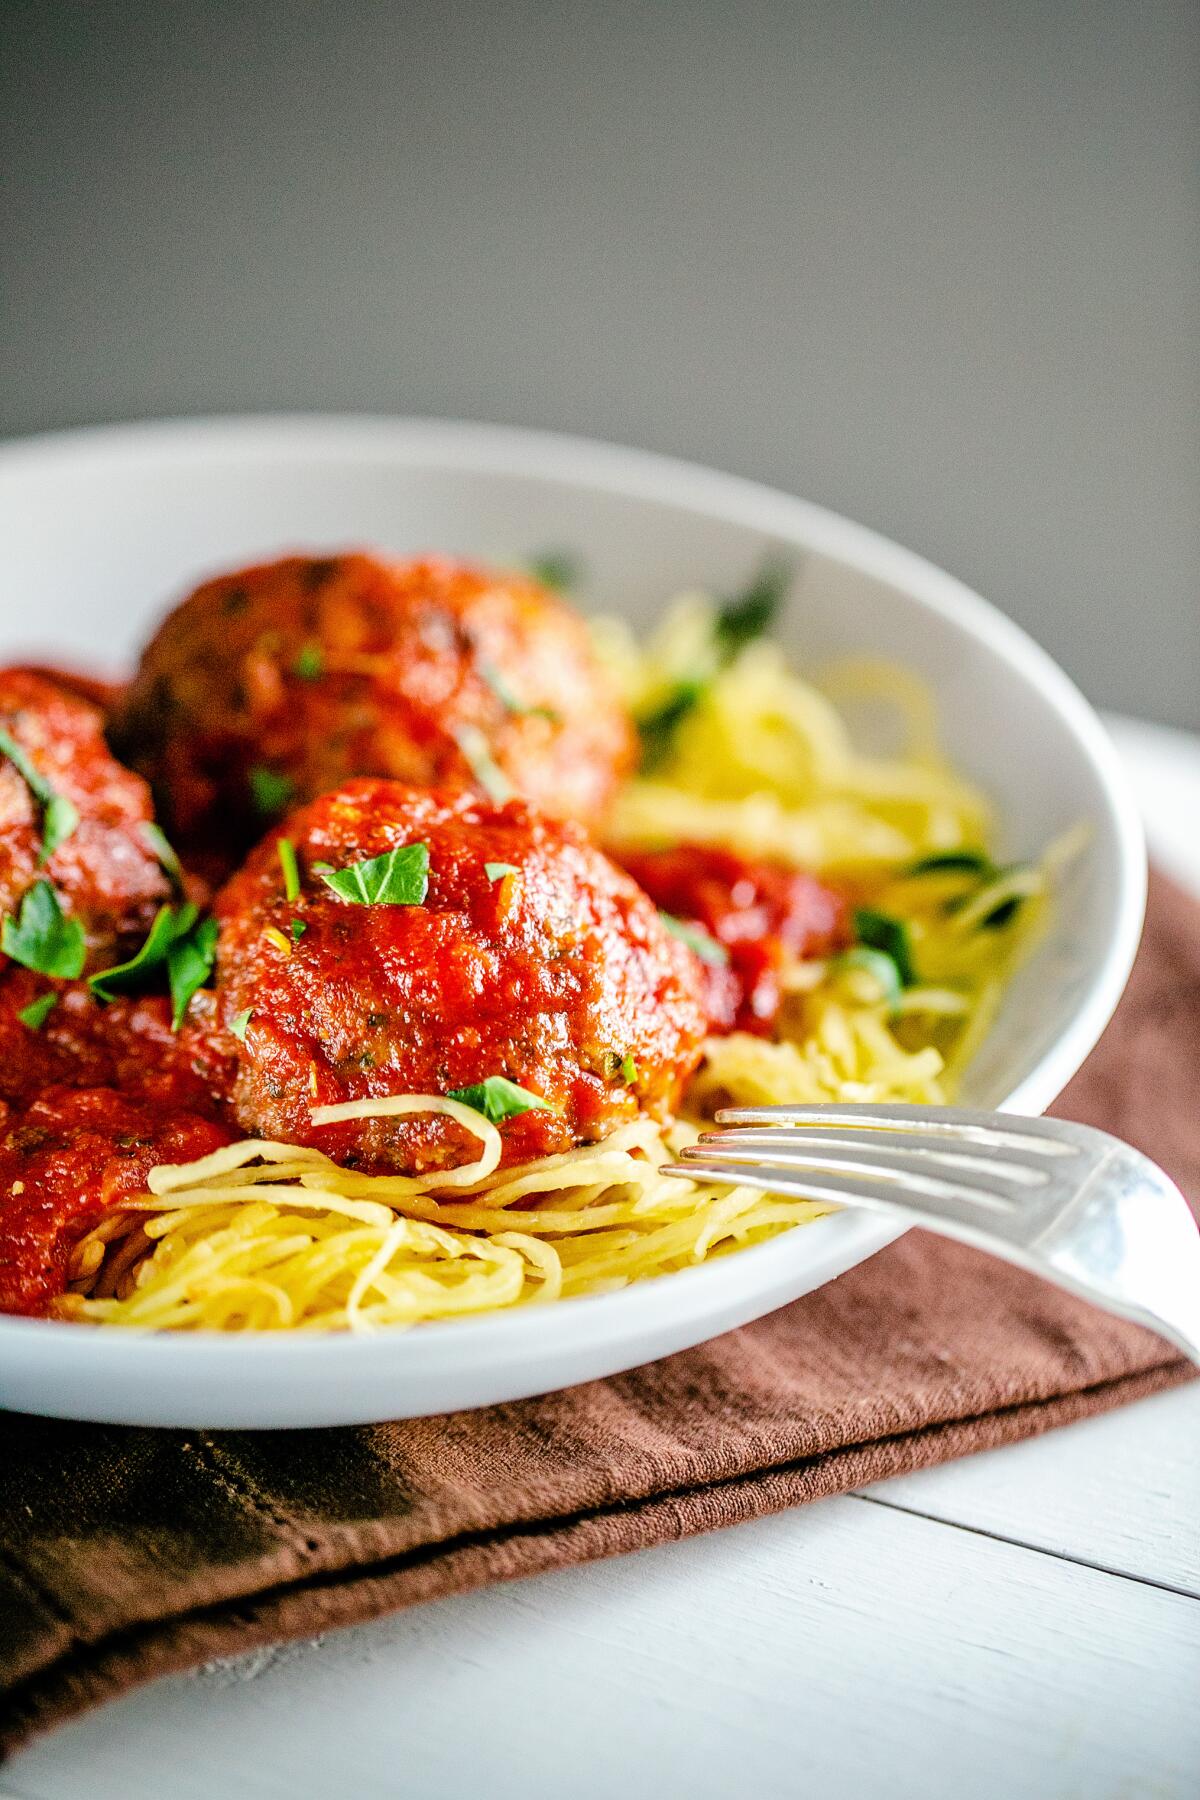 Meatballs and sauce over spaghetti squash.